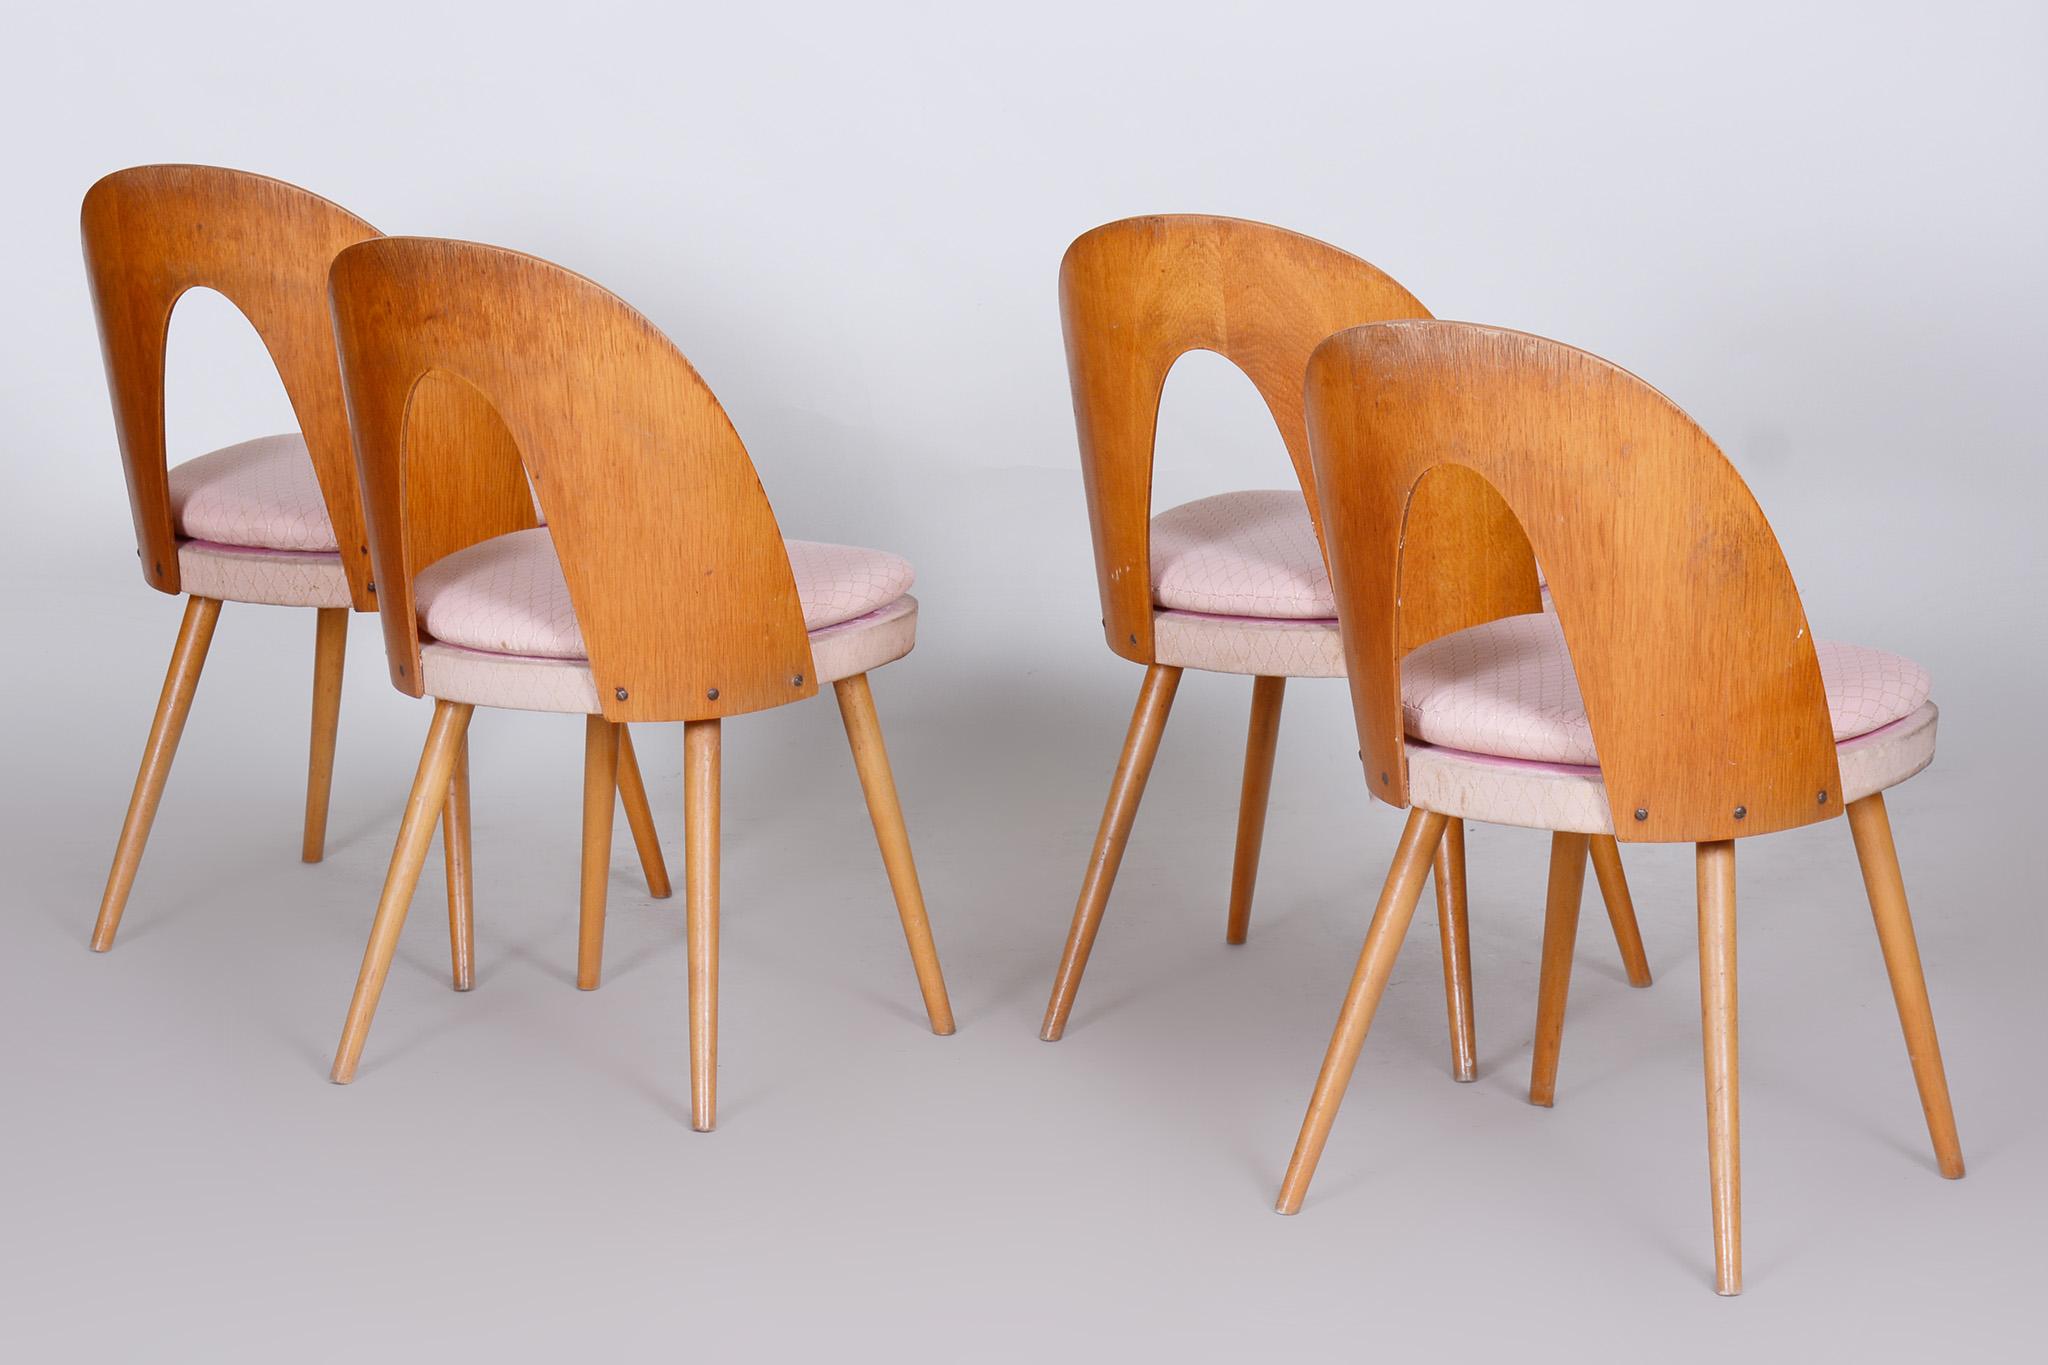 Set of Four Mid-Century Modern Chairs Made in 1950s Czechia by Antonín Šuman 1